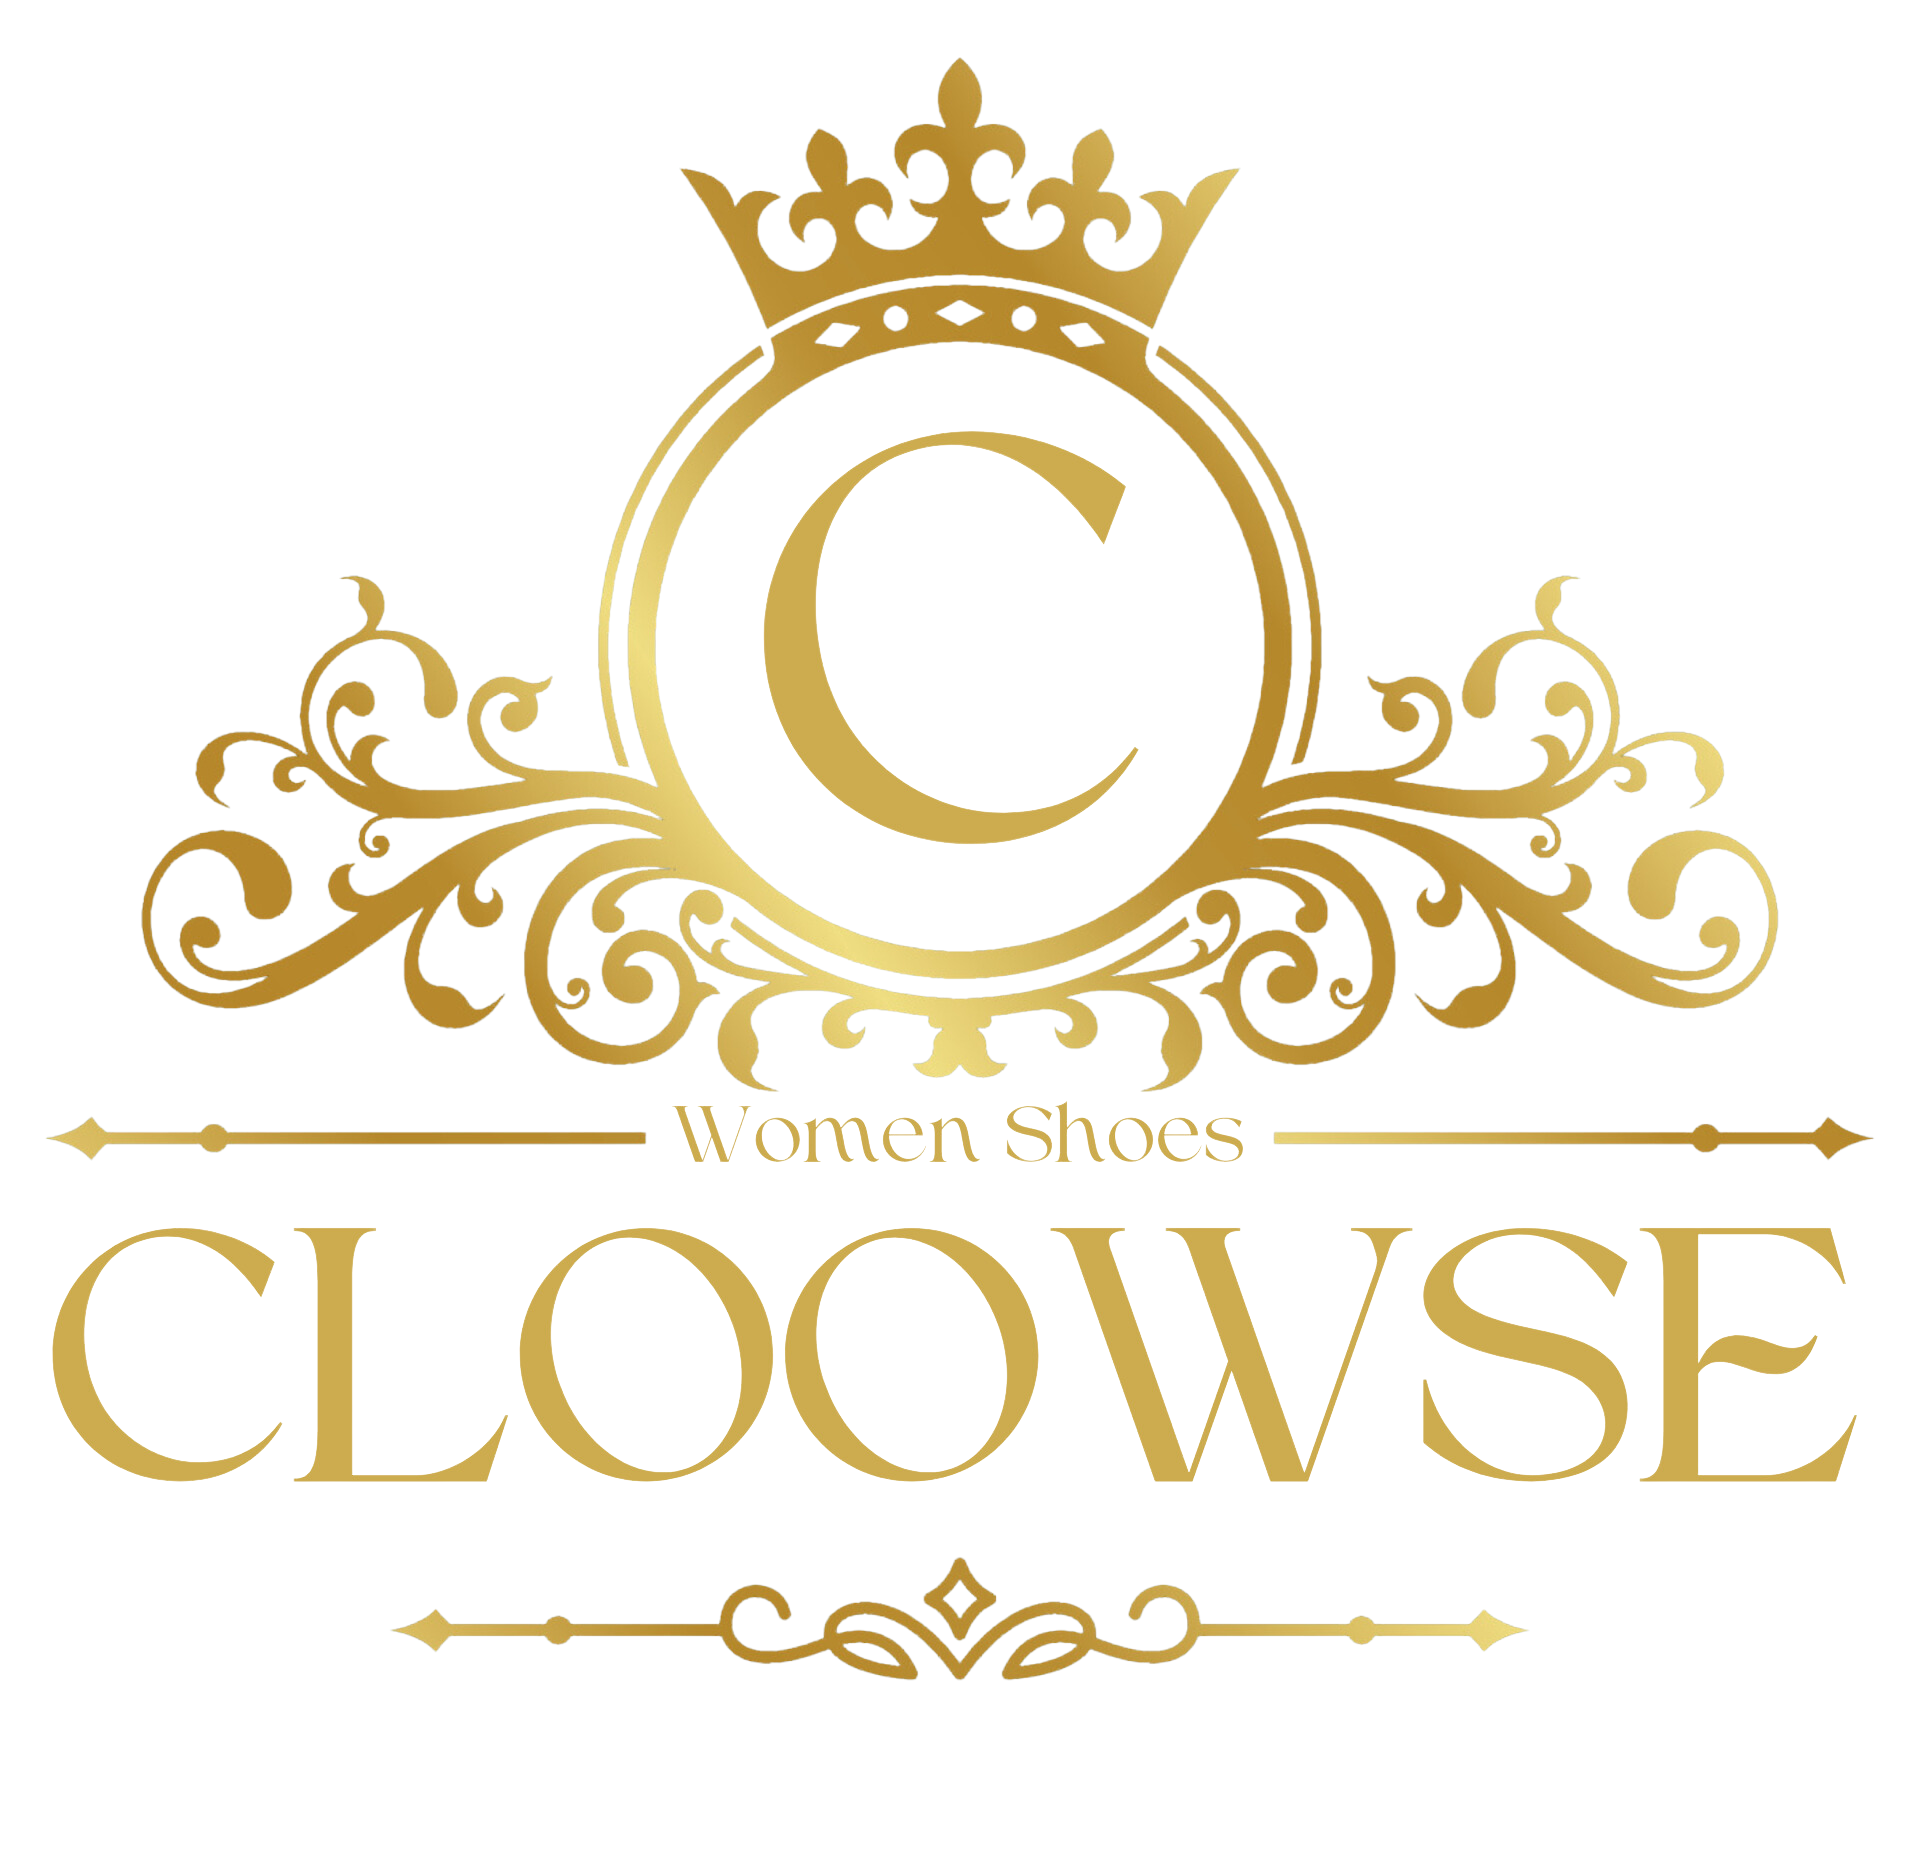 Cloowse